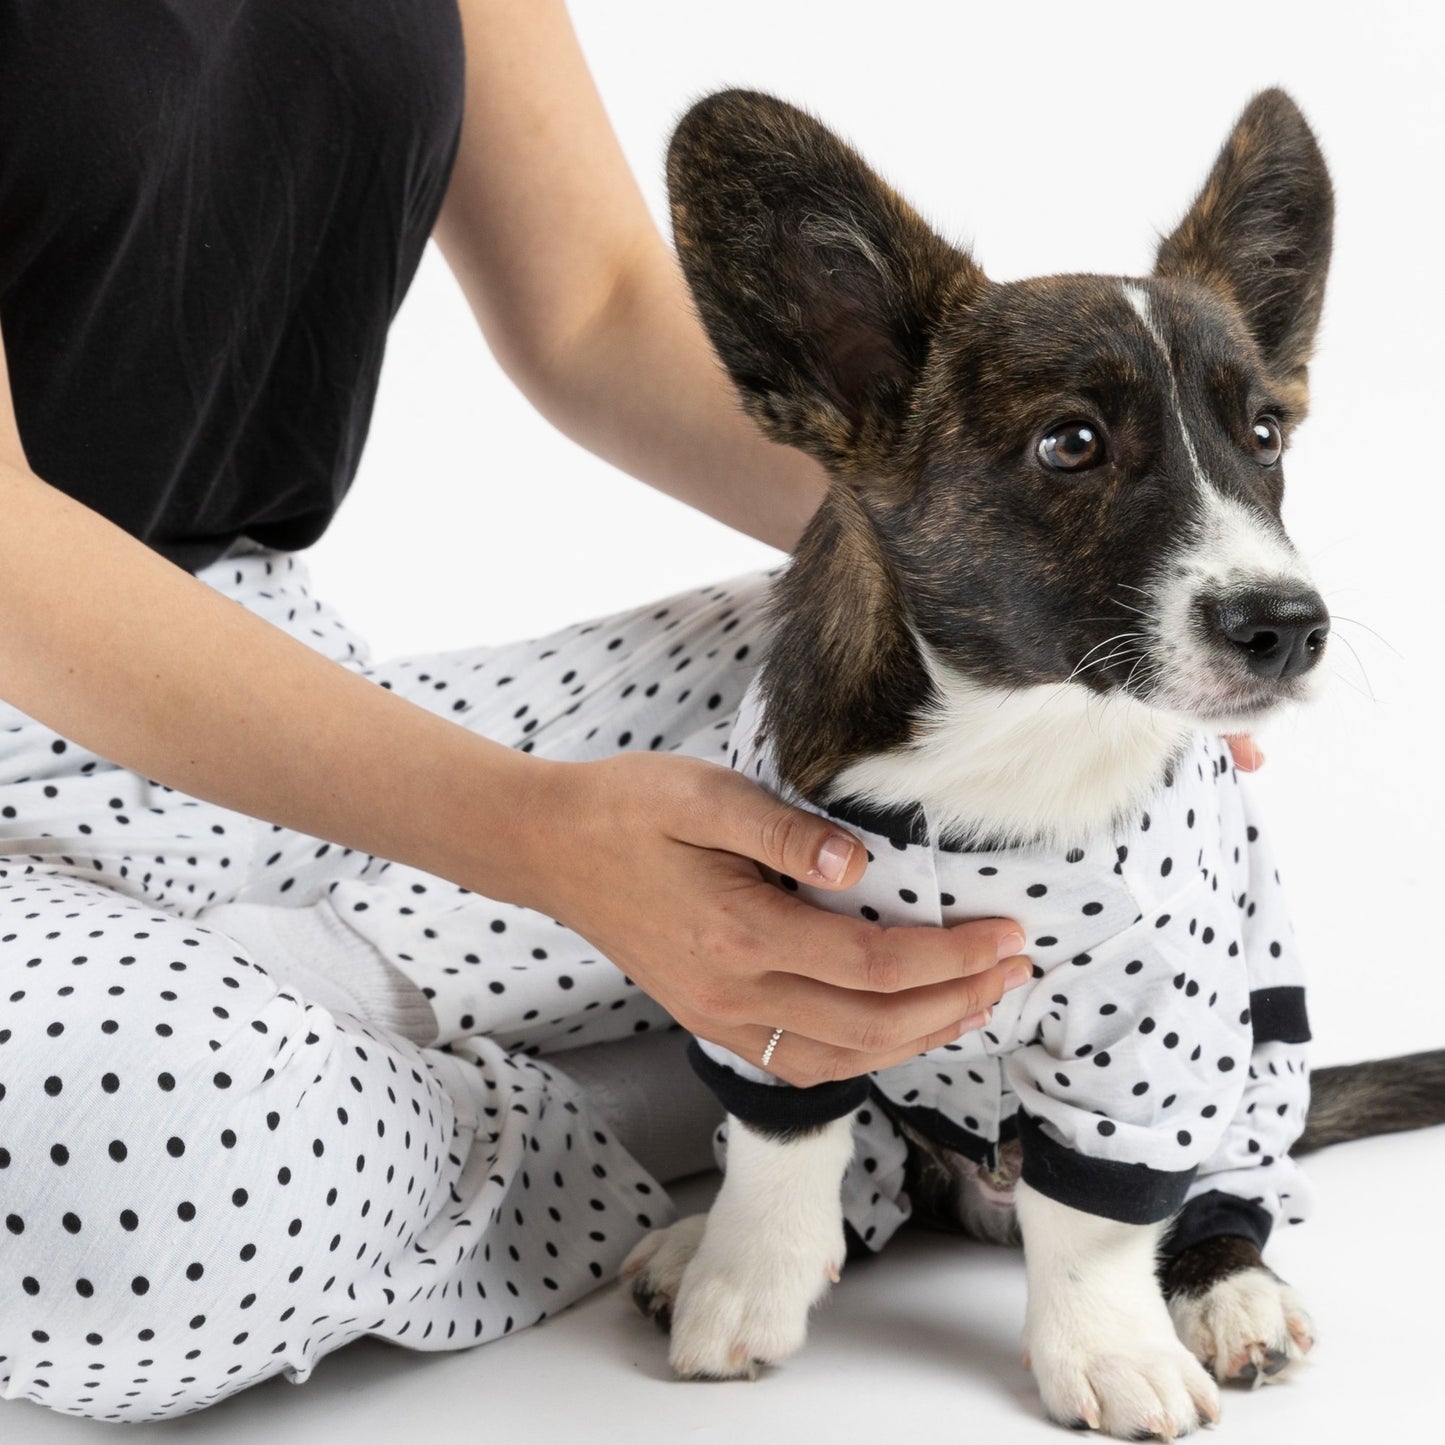 Matching Human & Dog Pajama - Polka Dot - Silver Paw